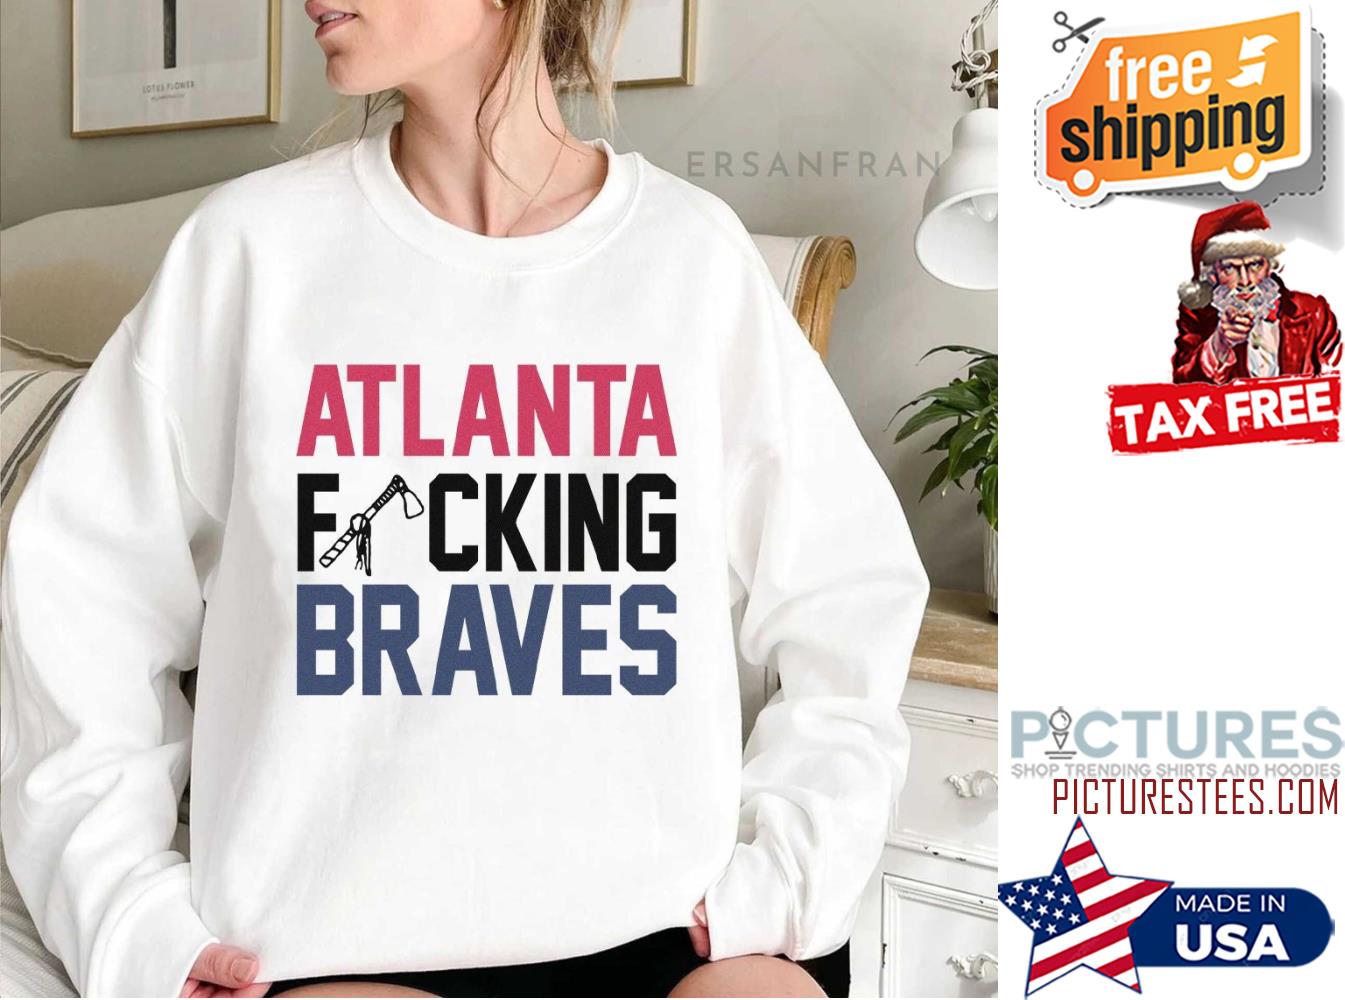 2023 Braves Country 5K Atlanta Braves shirt, hoodie, sweater, long sleeve  and tank top